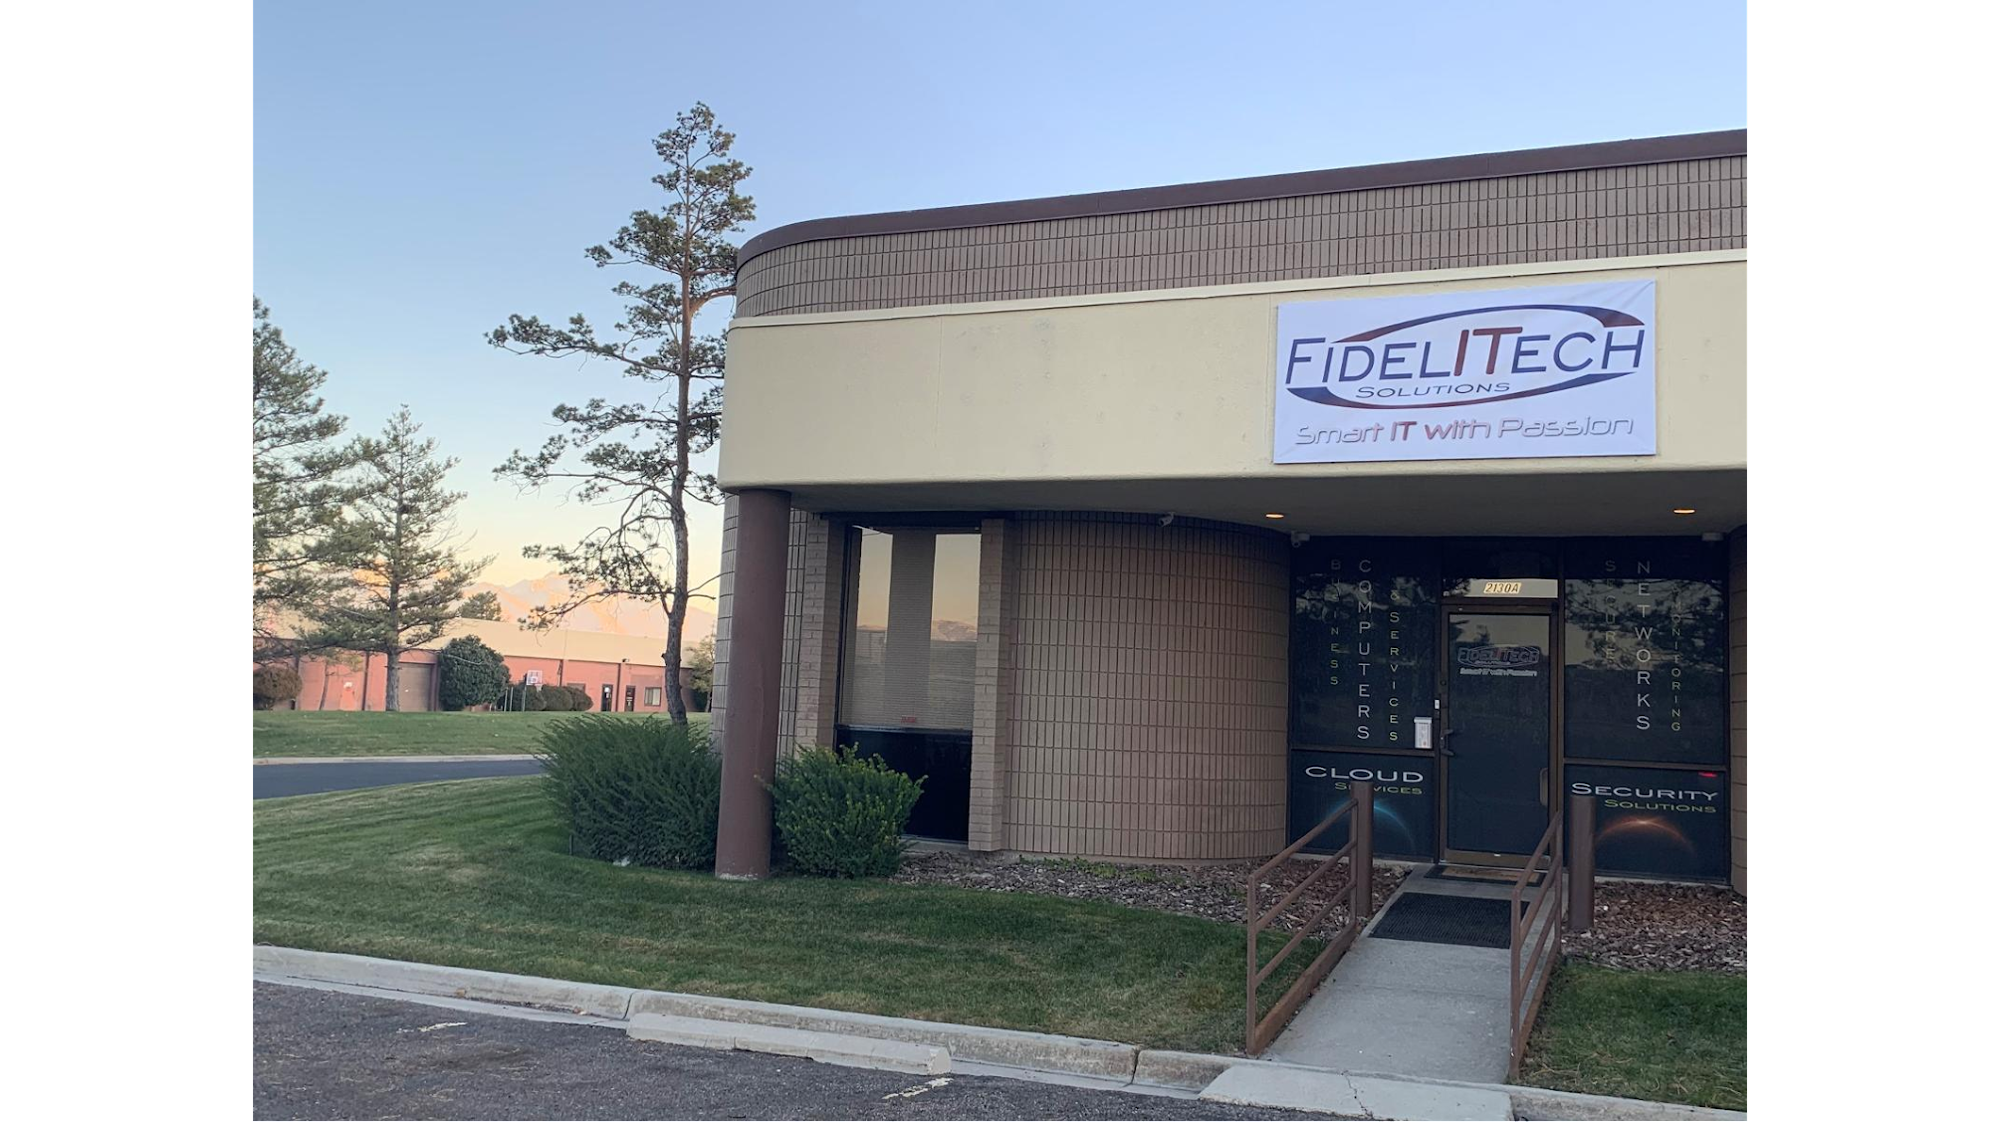 Fidelitech Solutions Inc.